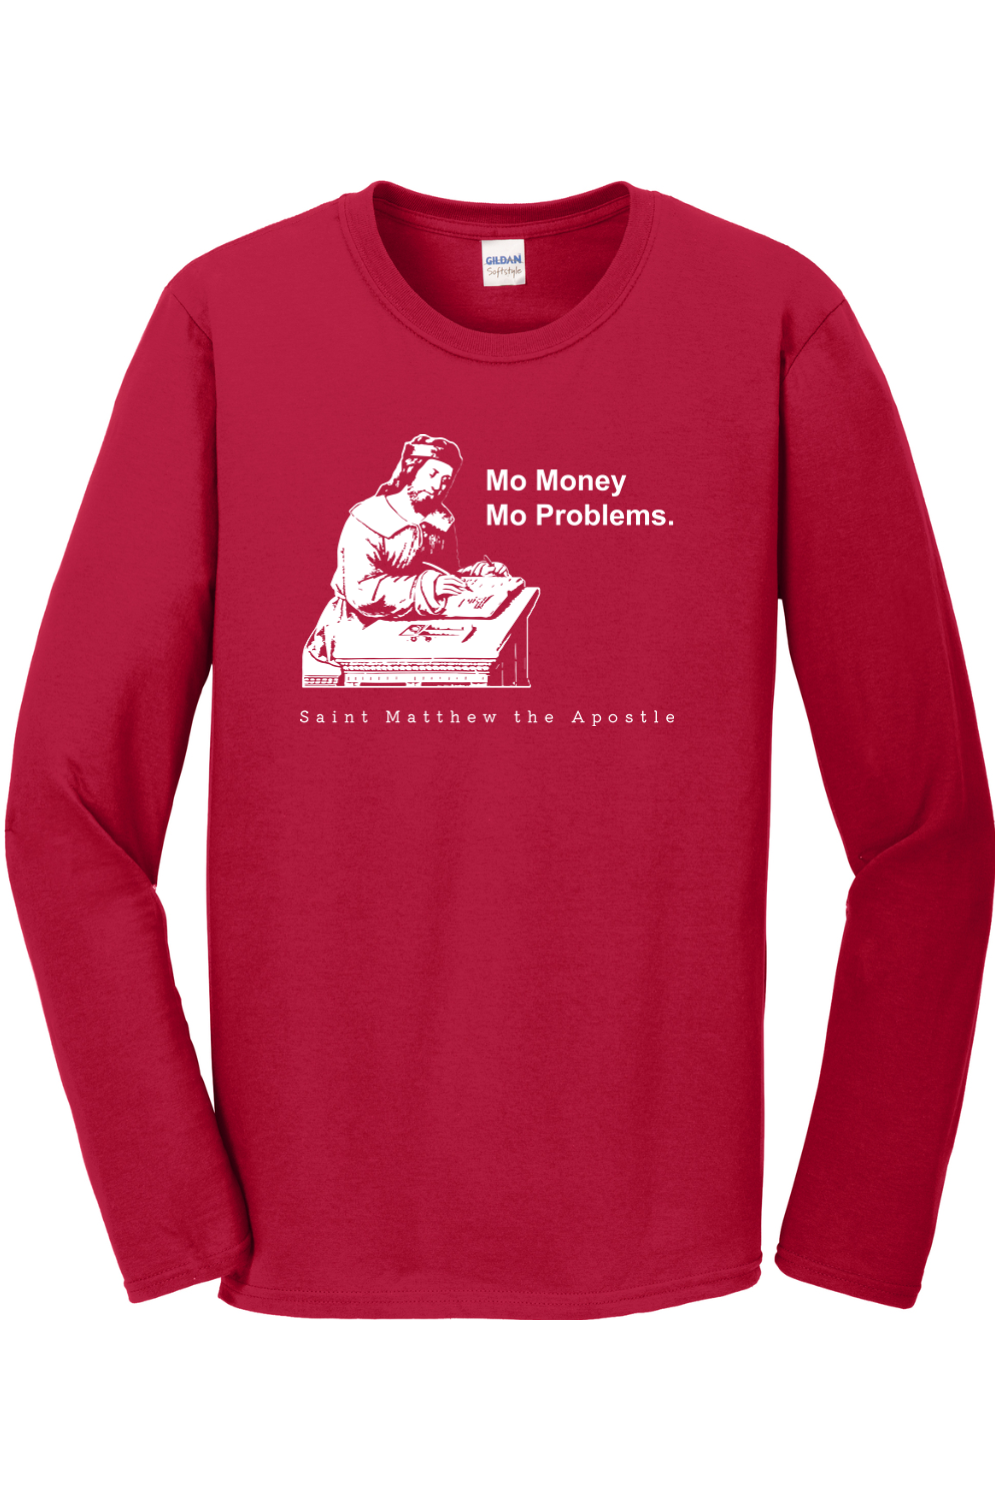 Mo Money Mo Problems - St. Matthew Long Sleeve